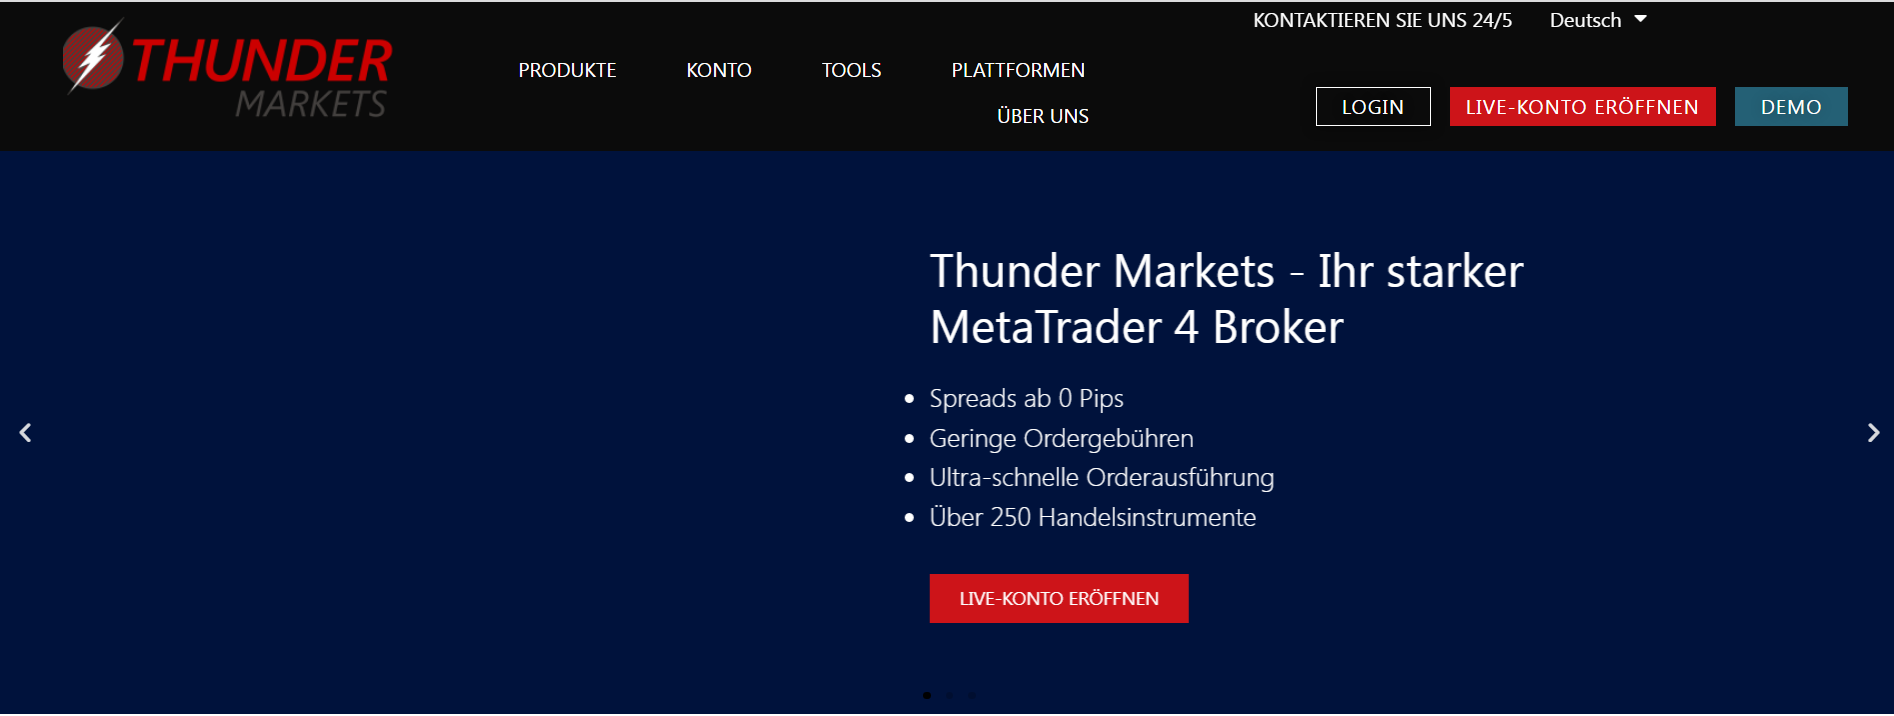 thundermarkets website